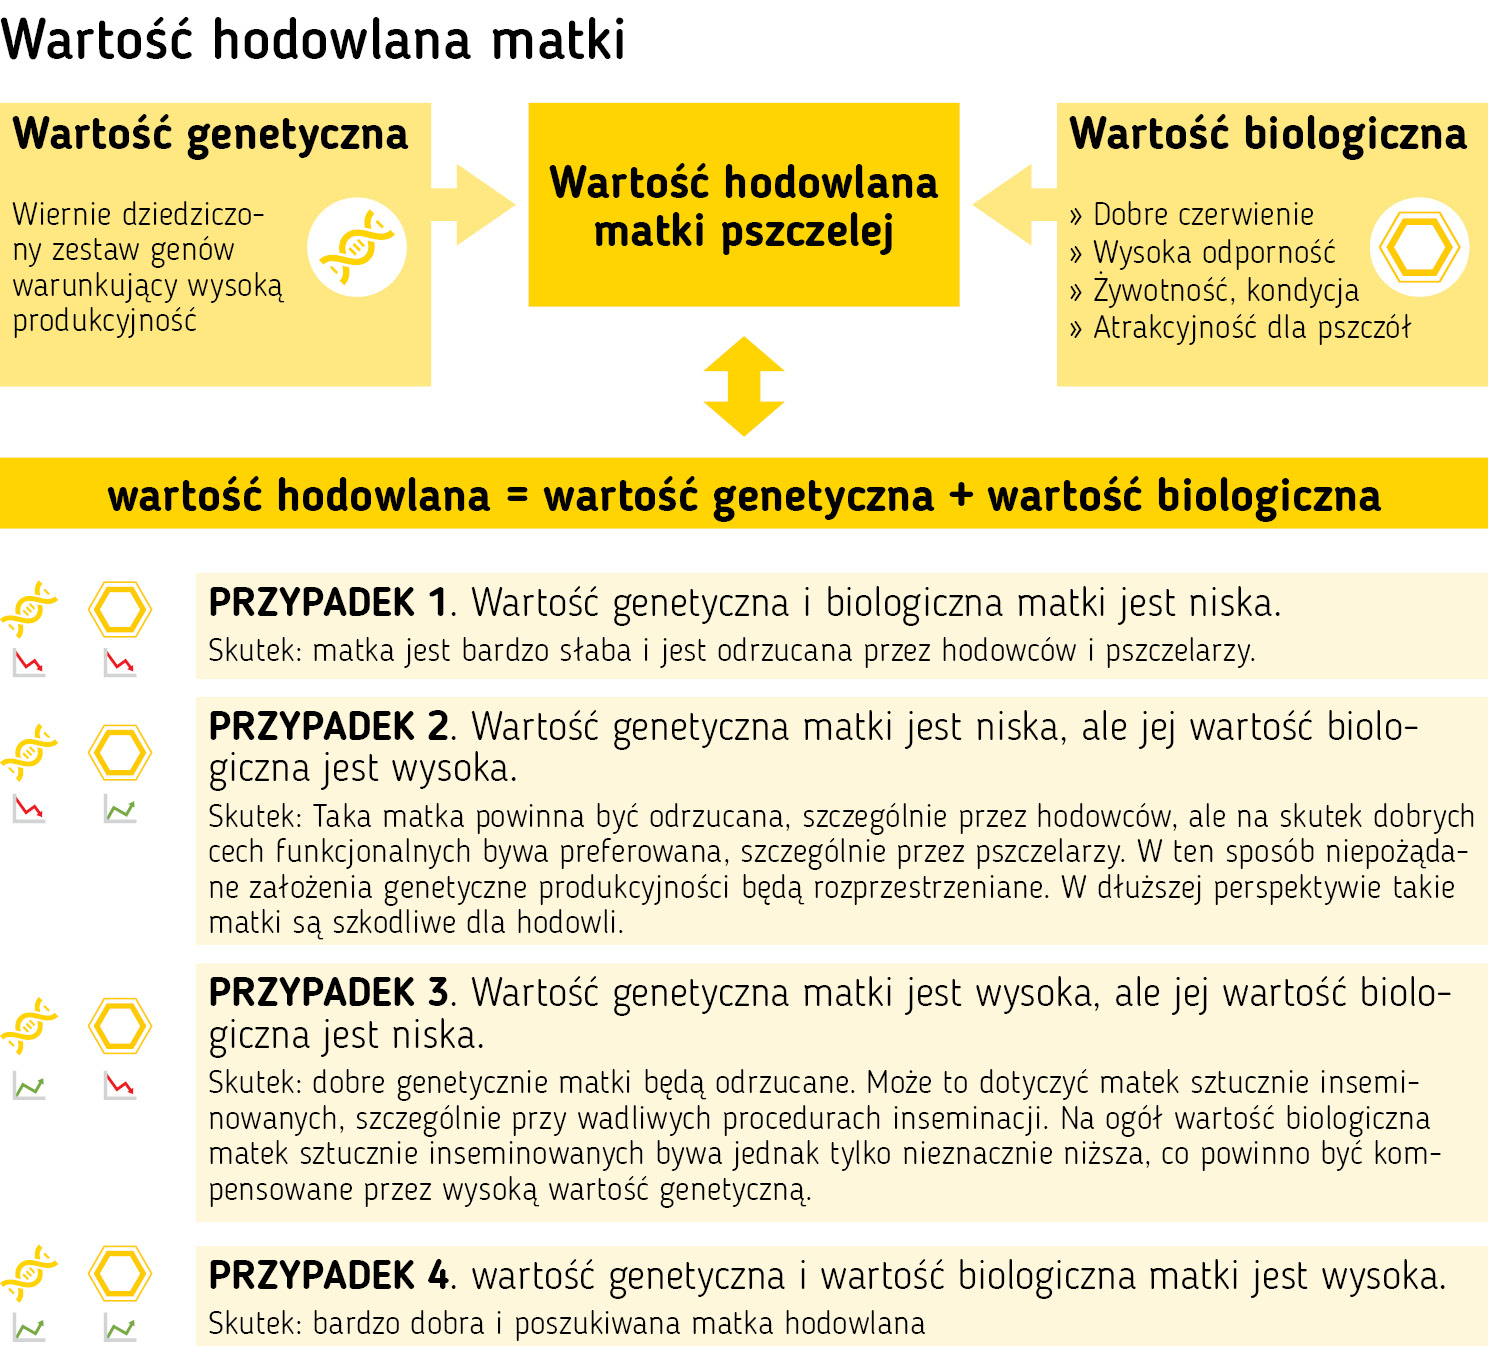 pasieka24.pl - Pszczelarskie fakty i mity